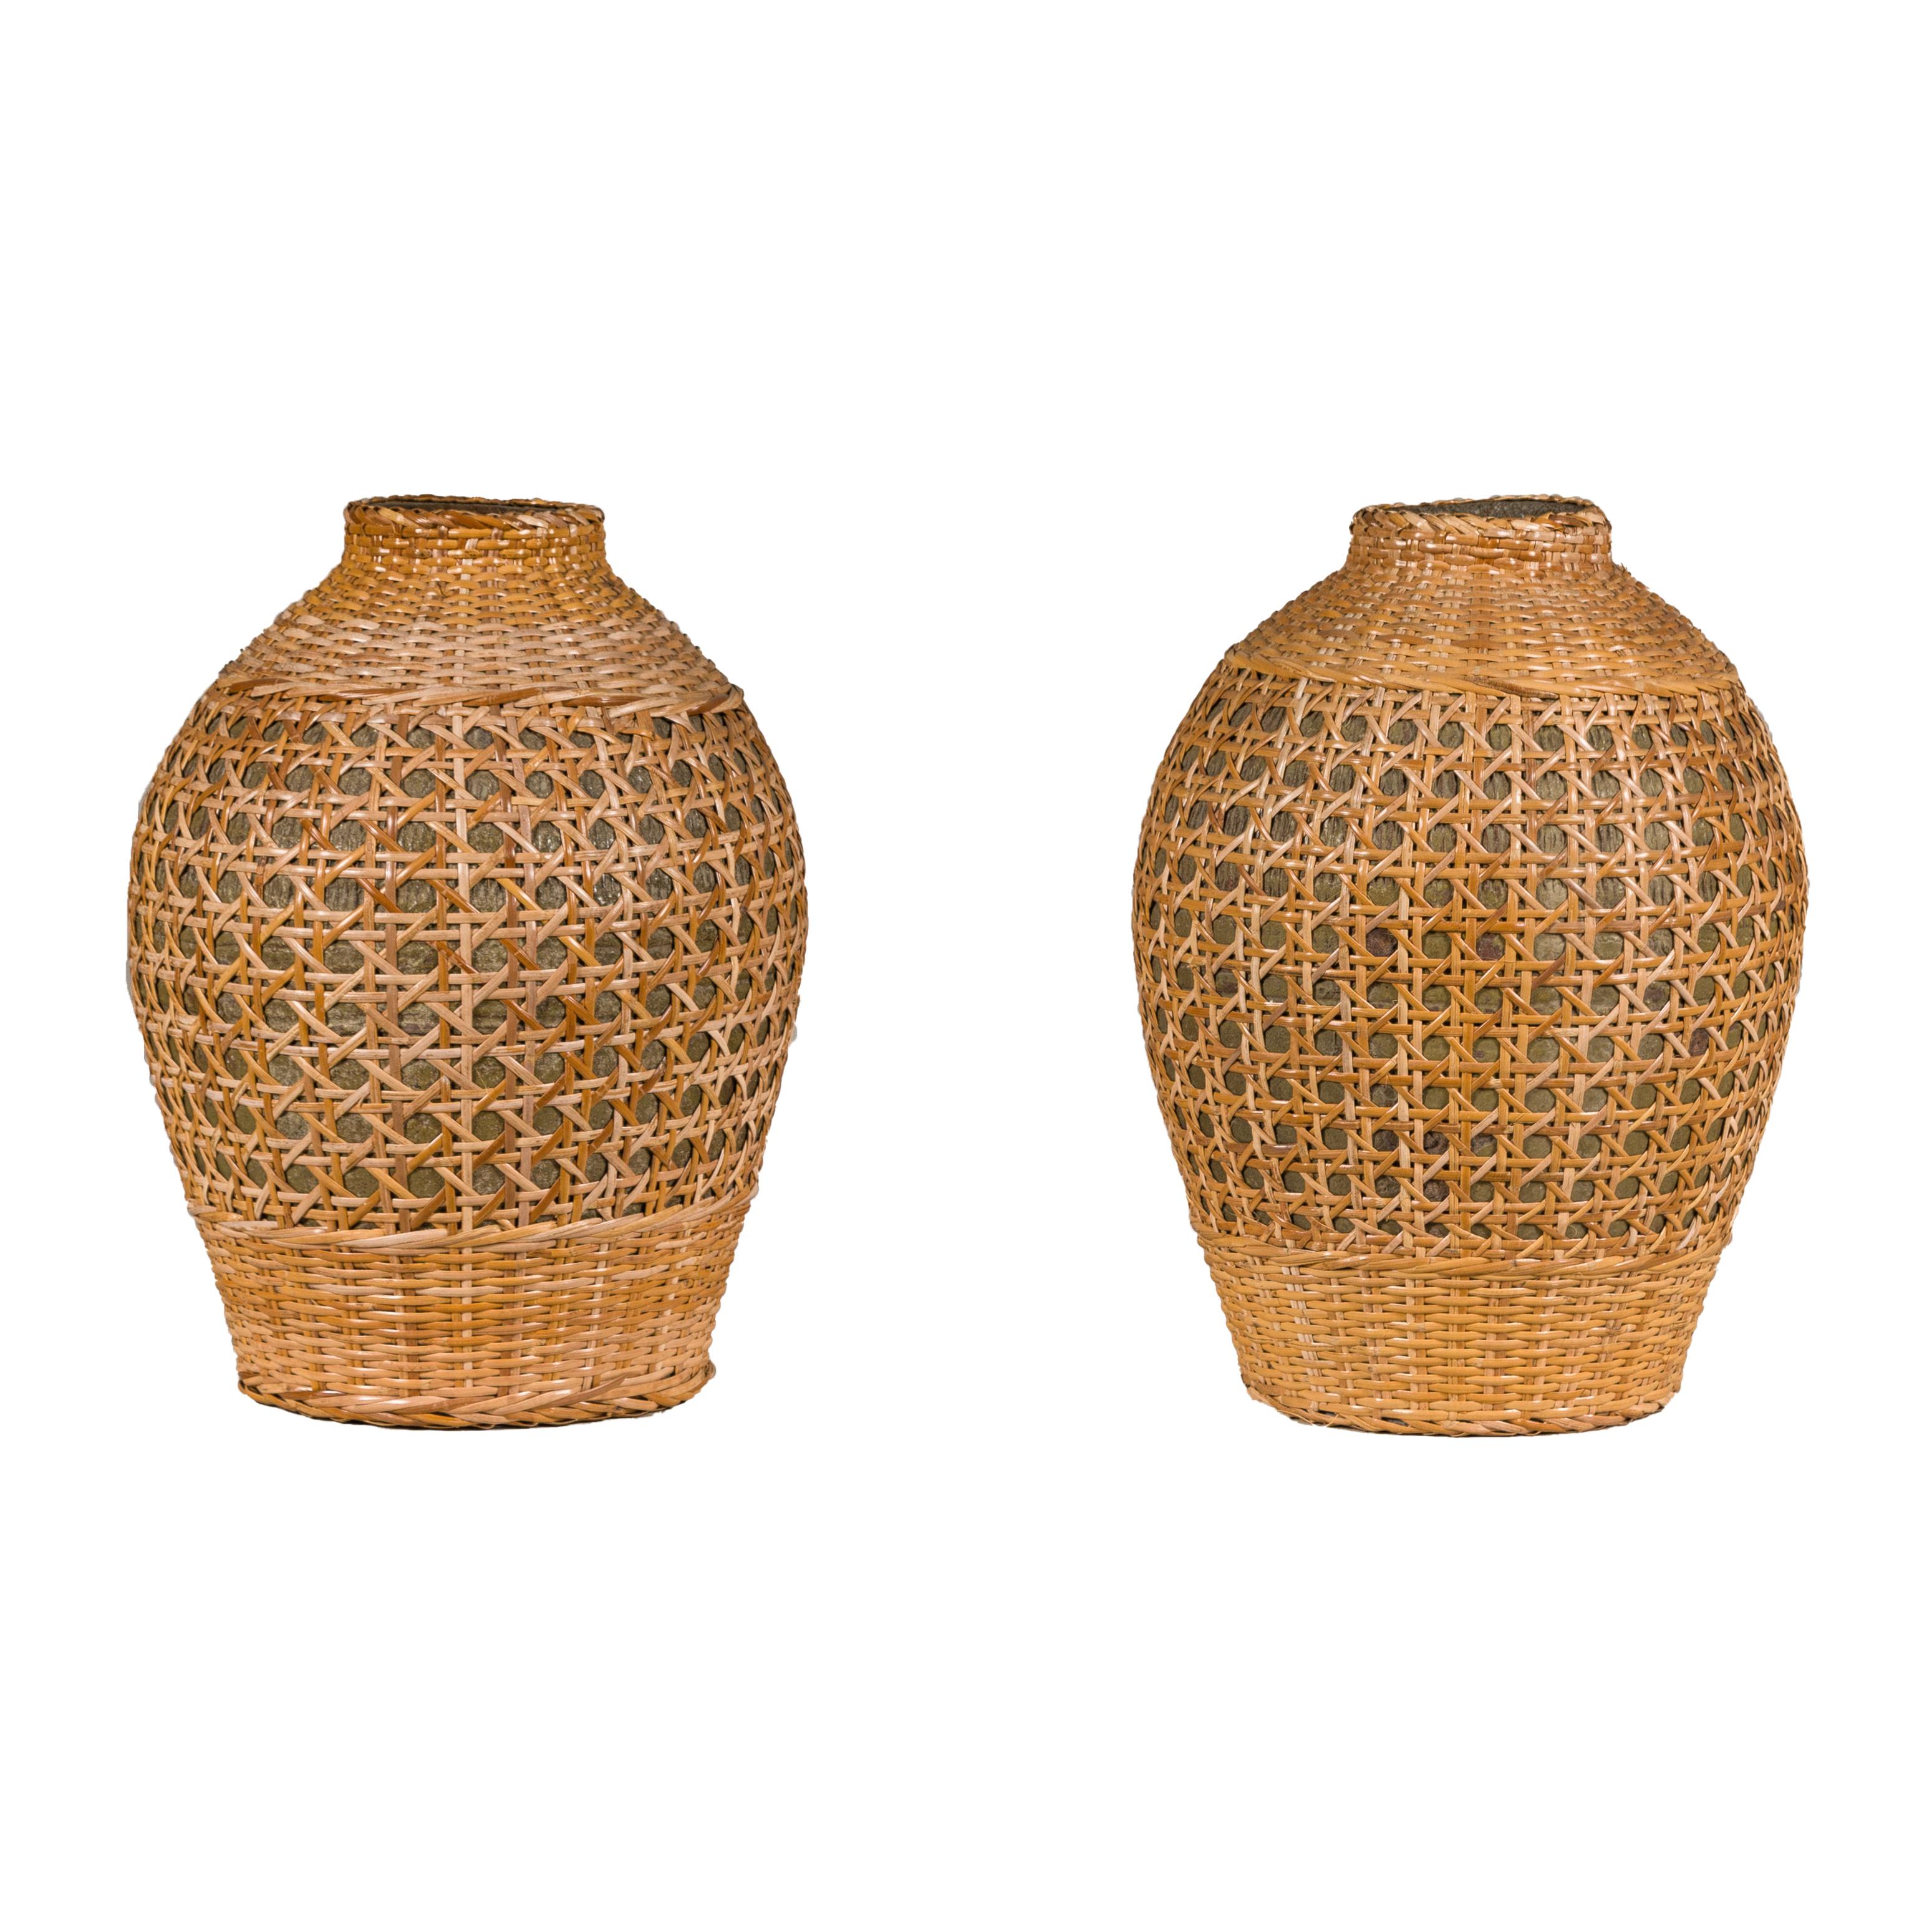 Rustic Pair of Midcentury Wicker Vases Made of Cane over Ceramic 10